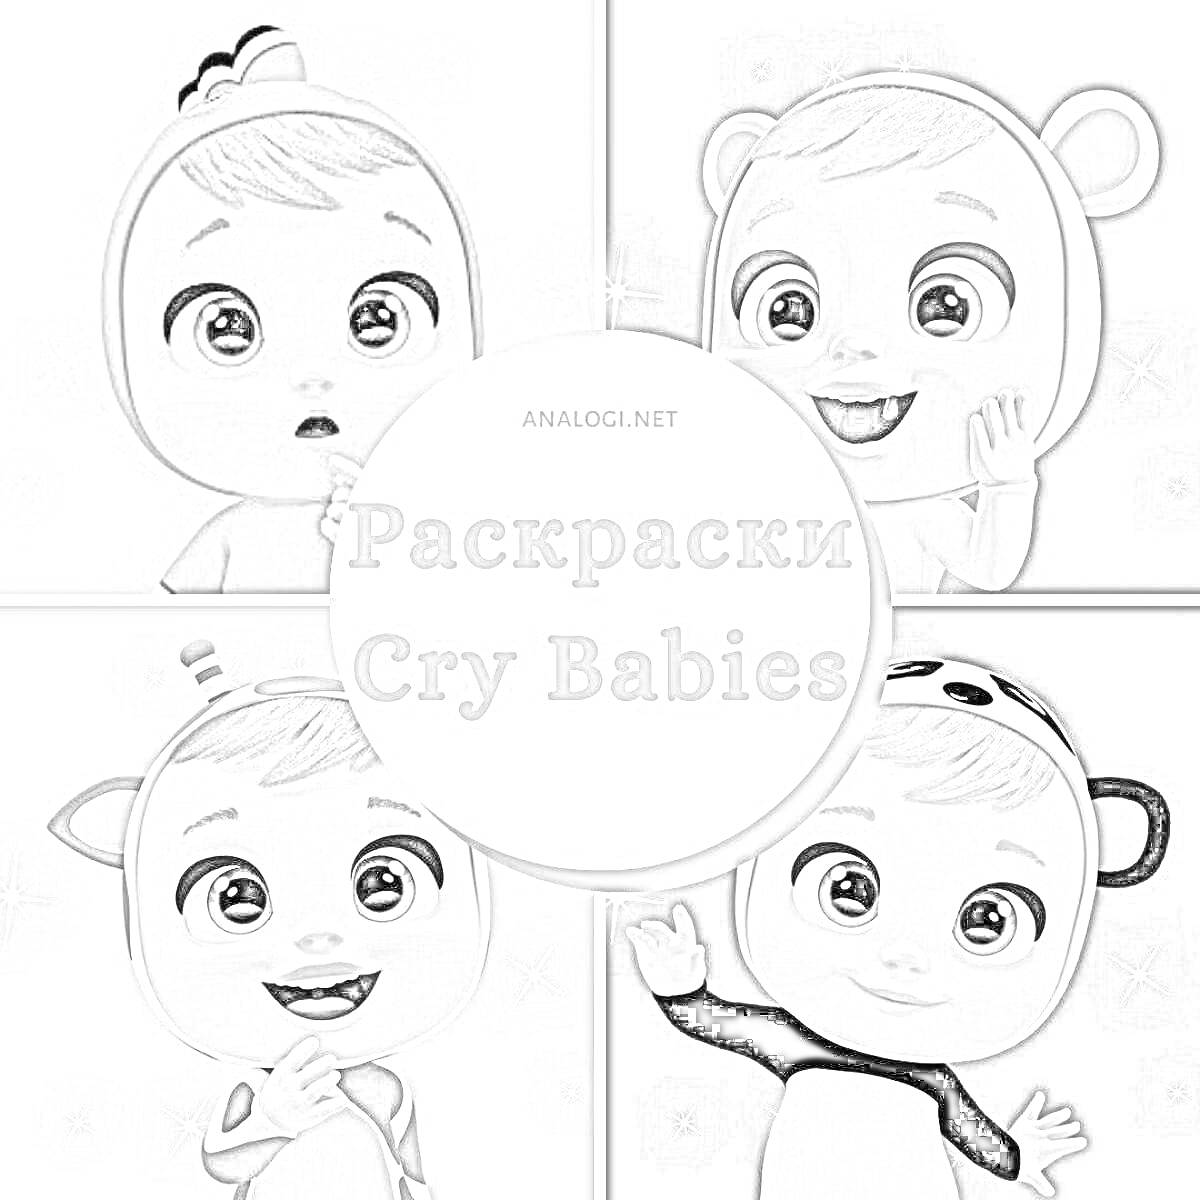 Раскраска Раскраска Cry Babies, четыре ребёнка в костюмах животных (тигра, медведя, жирафа, панды)